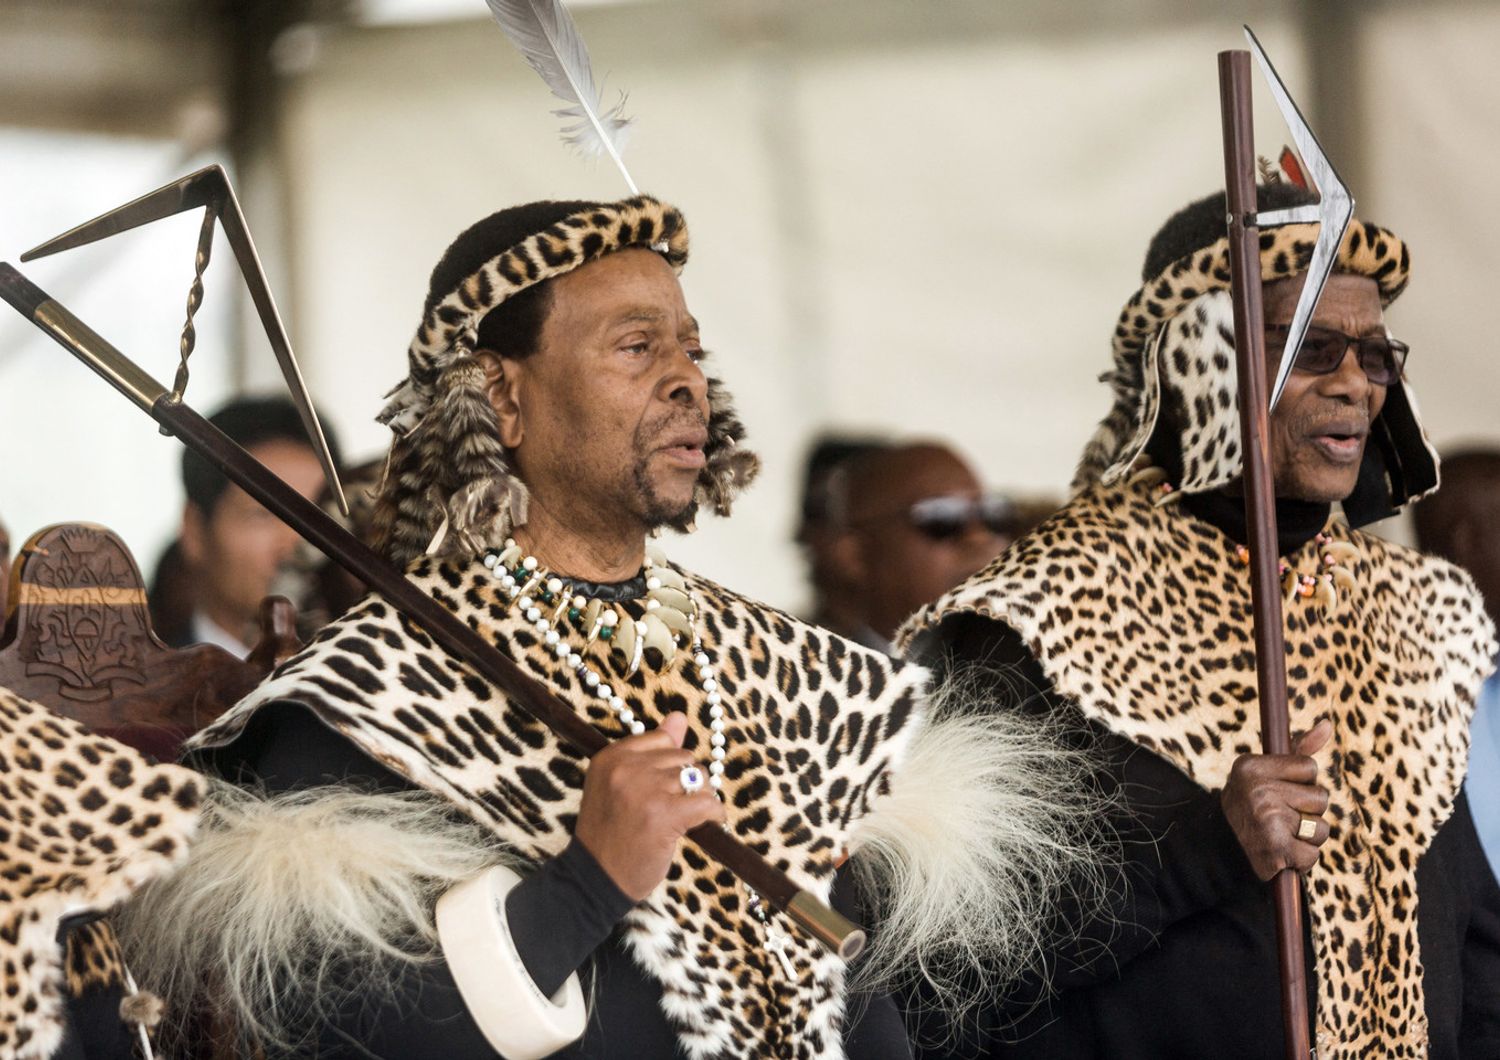 Goodwill Zwelithini, re degli Zulu&nbsp;